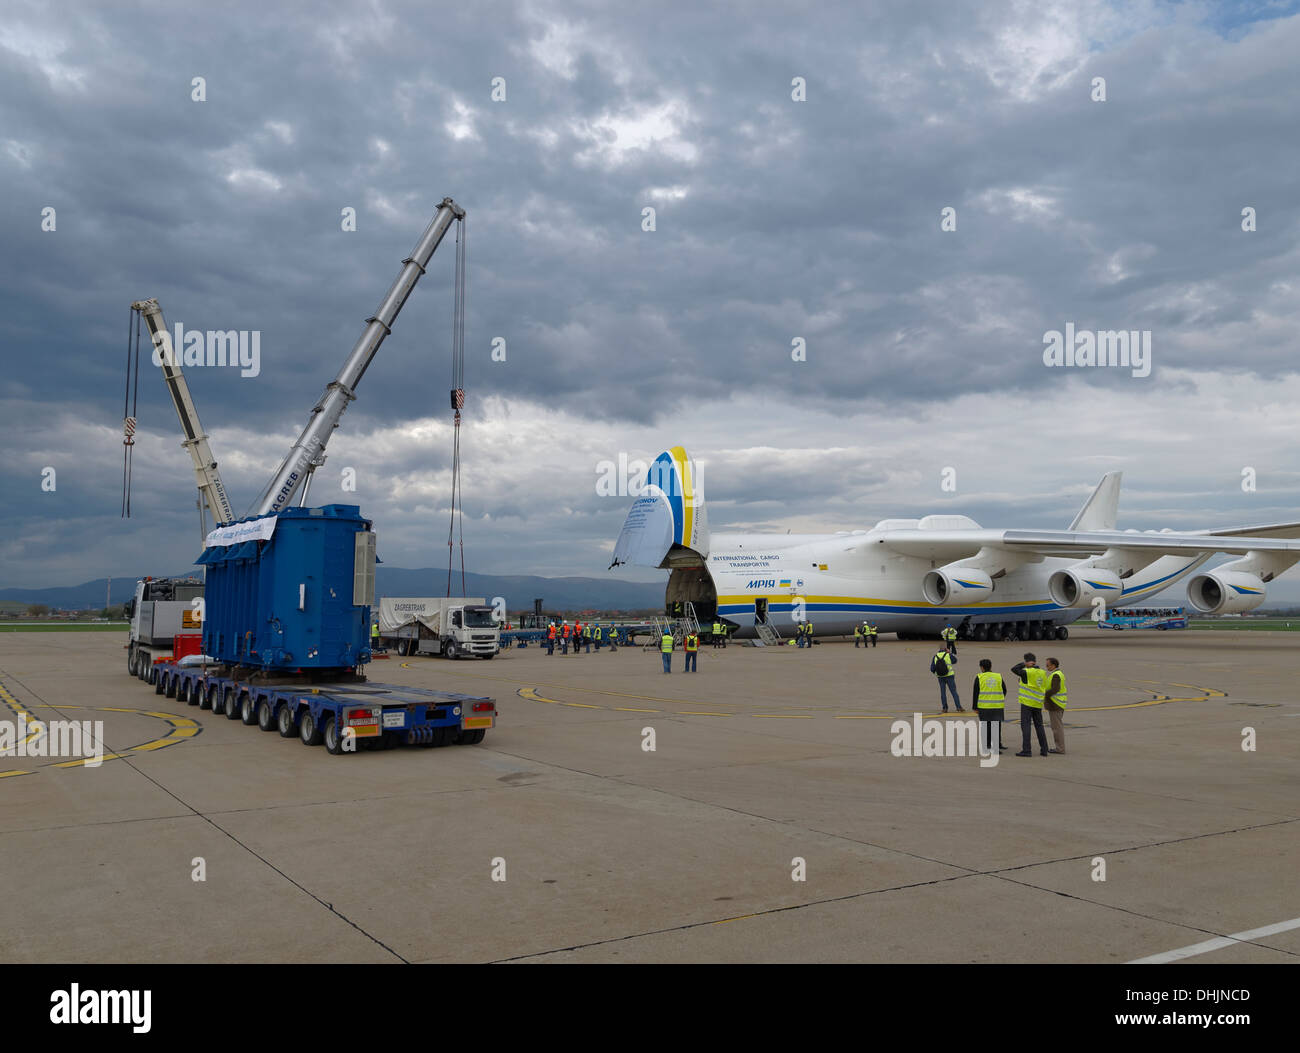 140 Tonnen Tmk2200 Generator (Blue Box) vor in der Bun-Frachtflugzeug Antonov An-225 "Mriya" geladen. Stockfoto